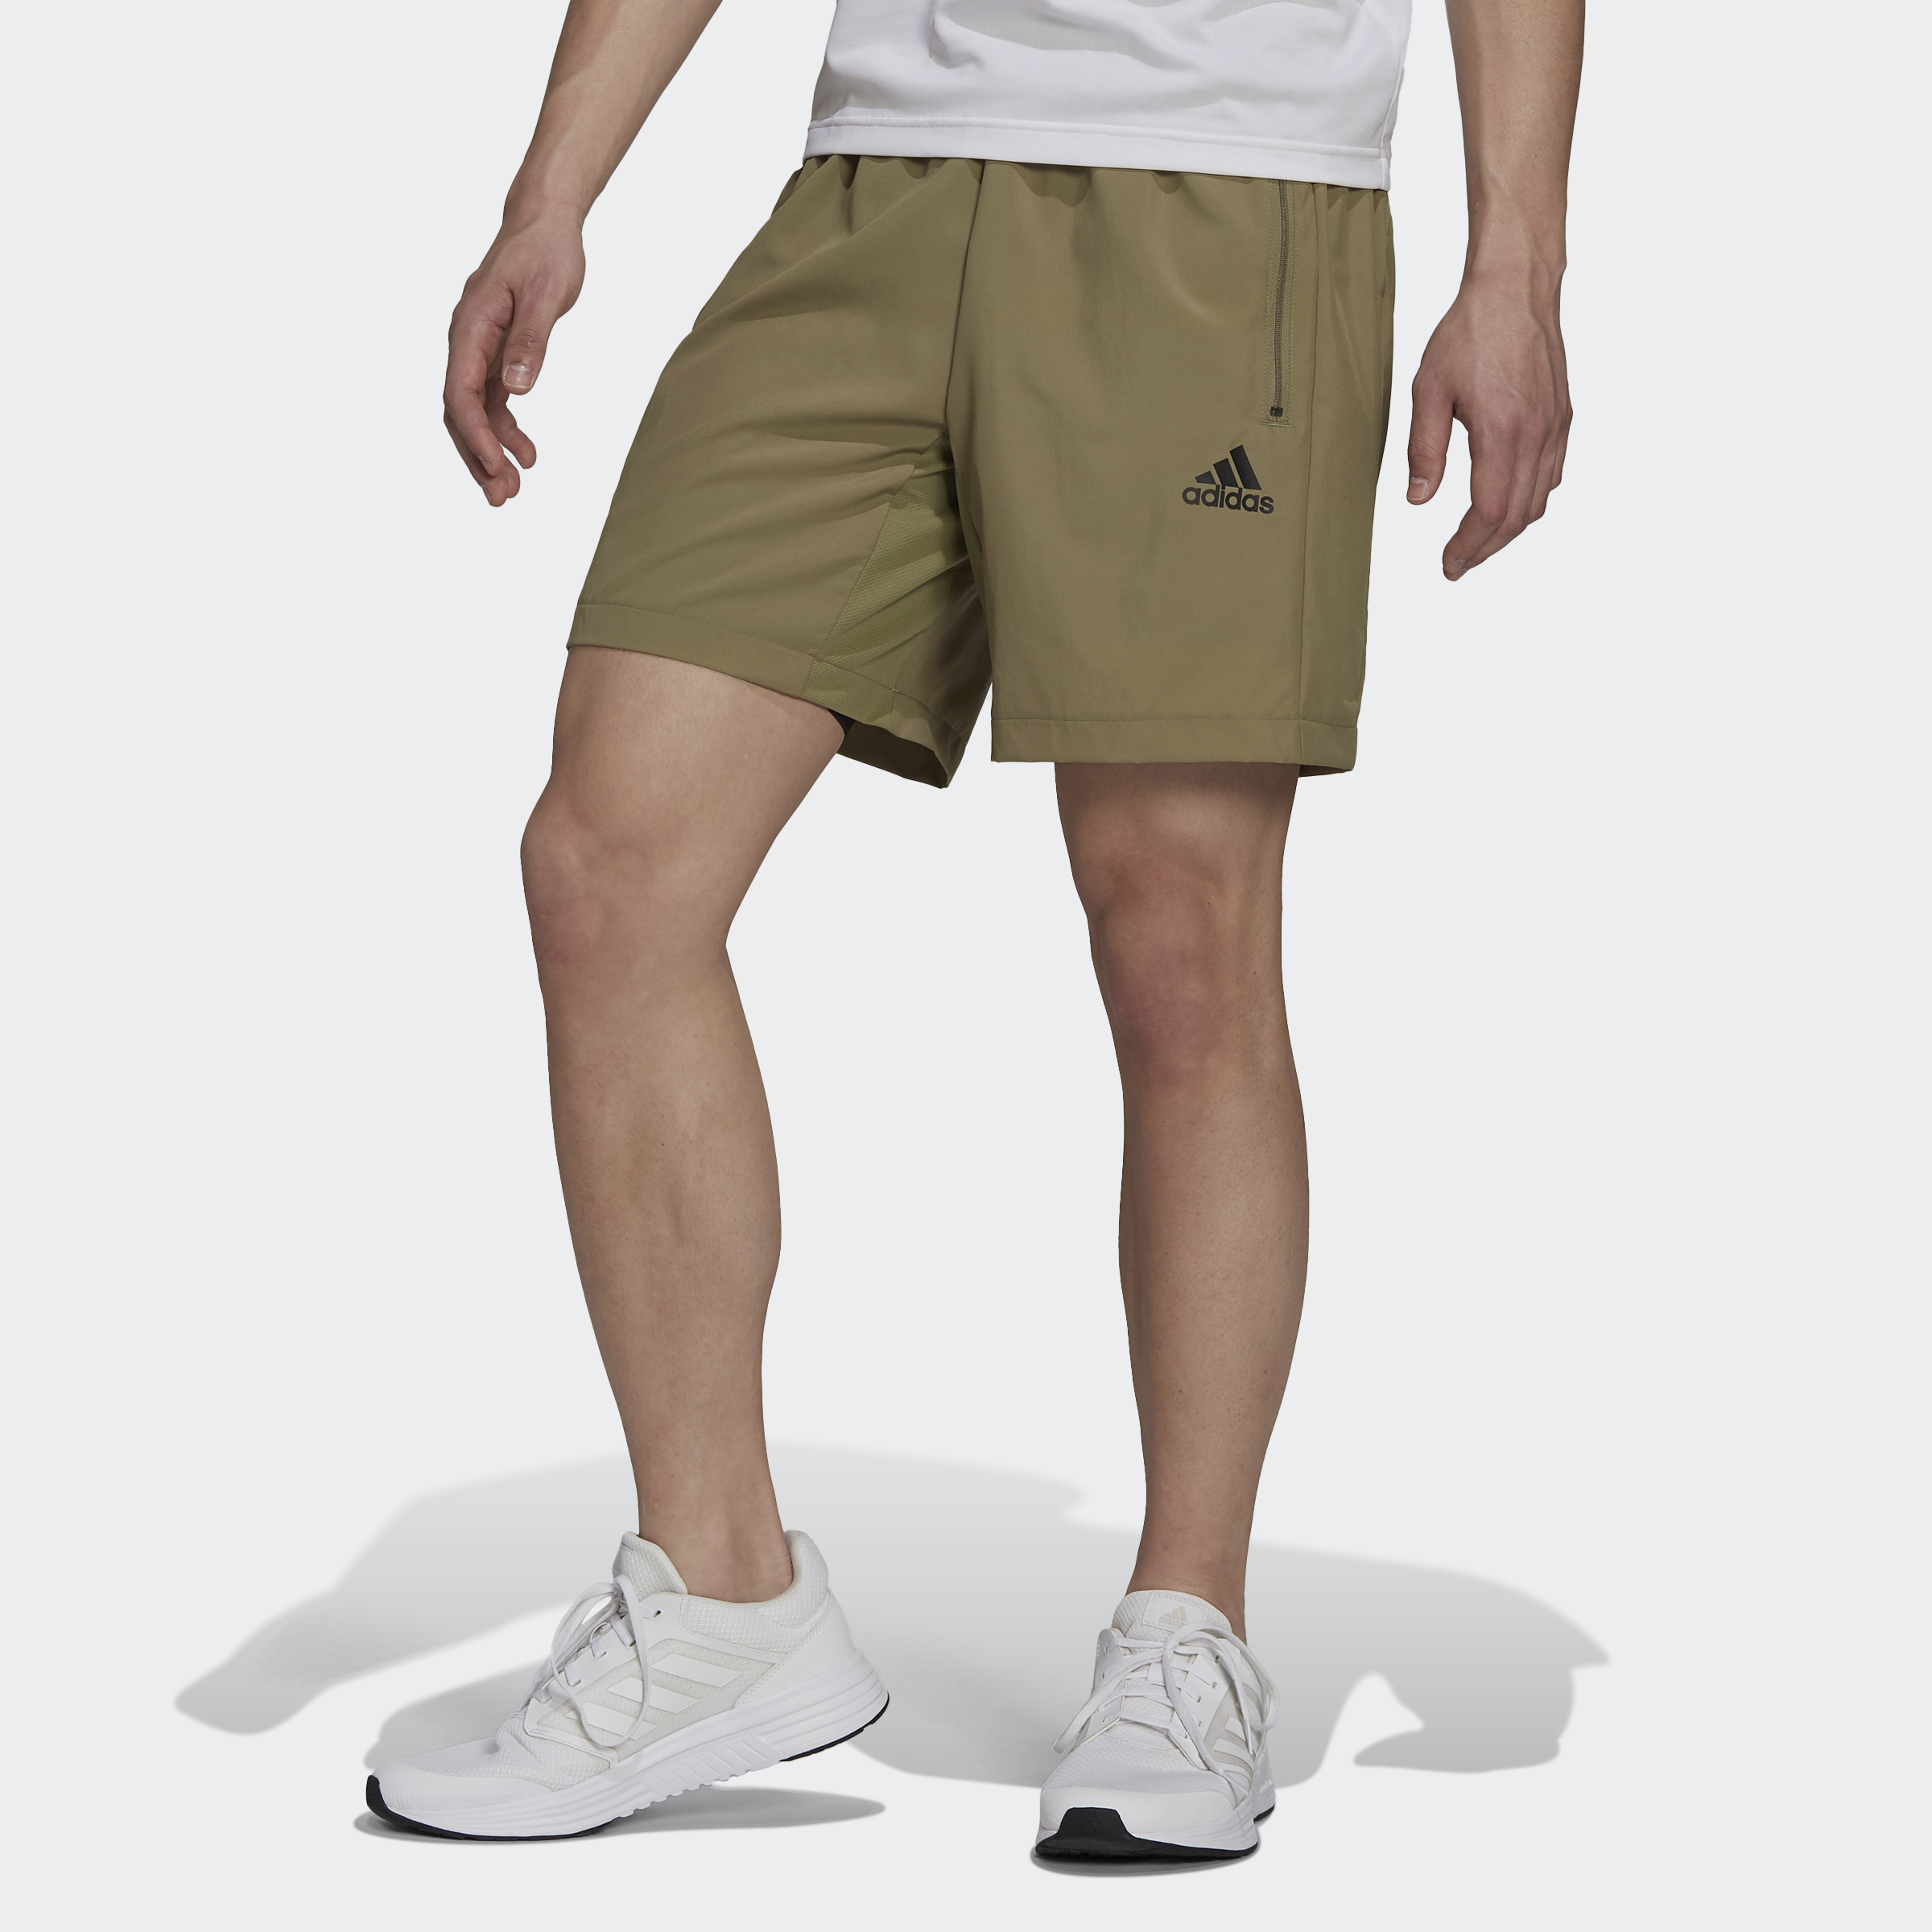 adidas Men's Aeroready Designed 2 Move All Set 9-inch Shorts